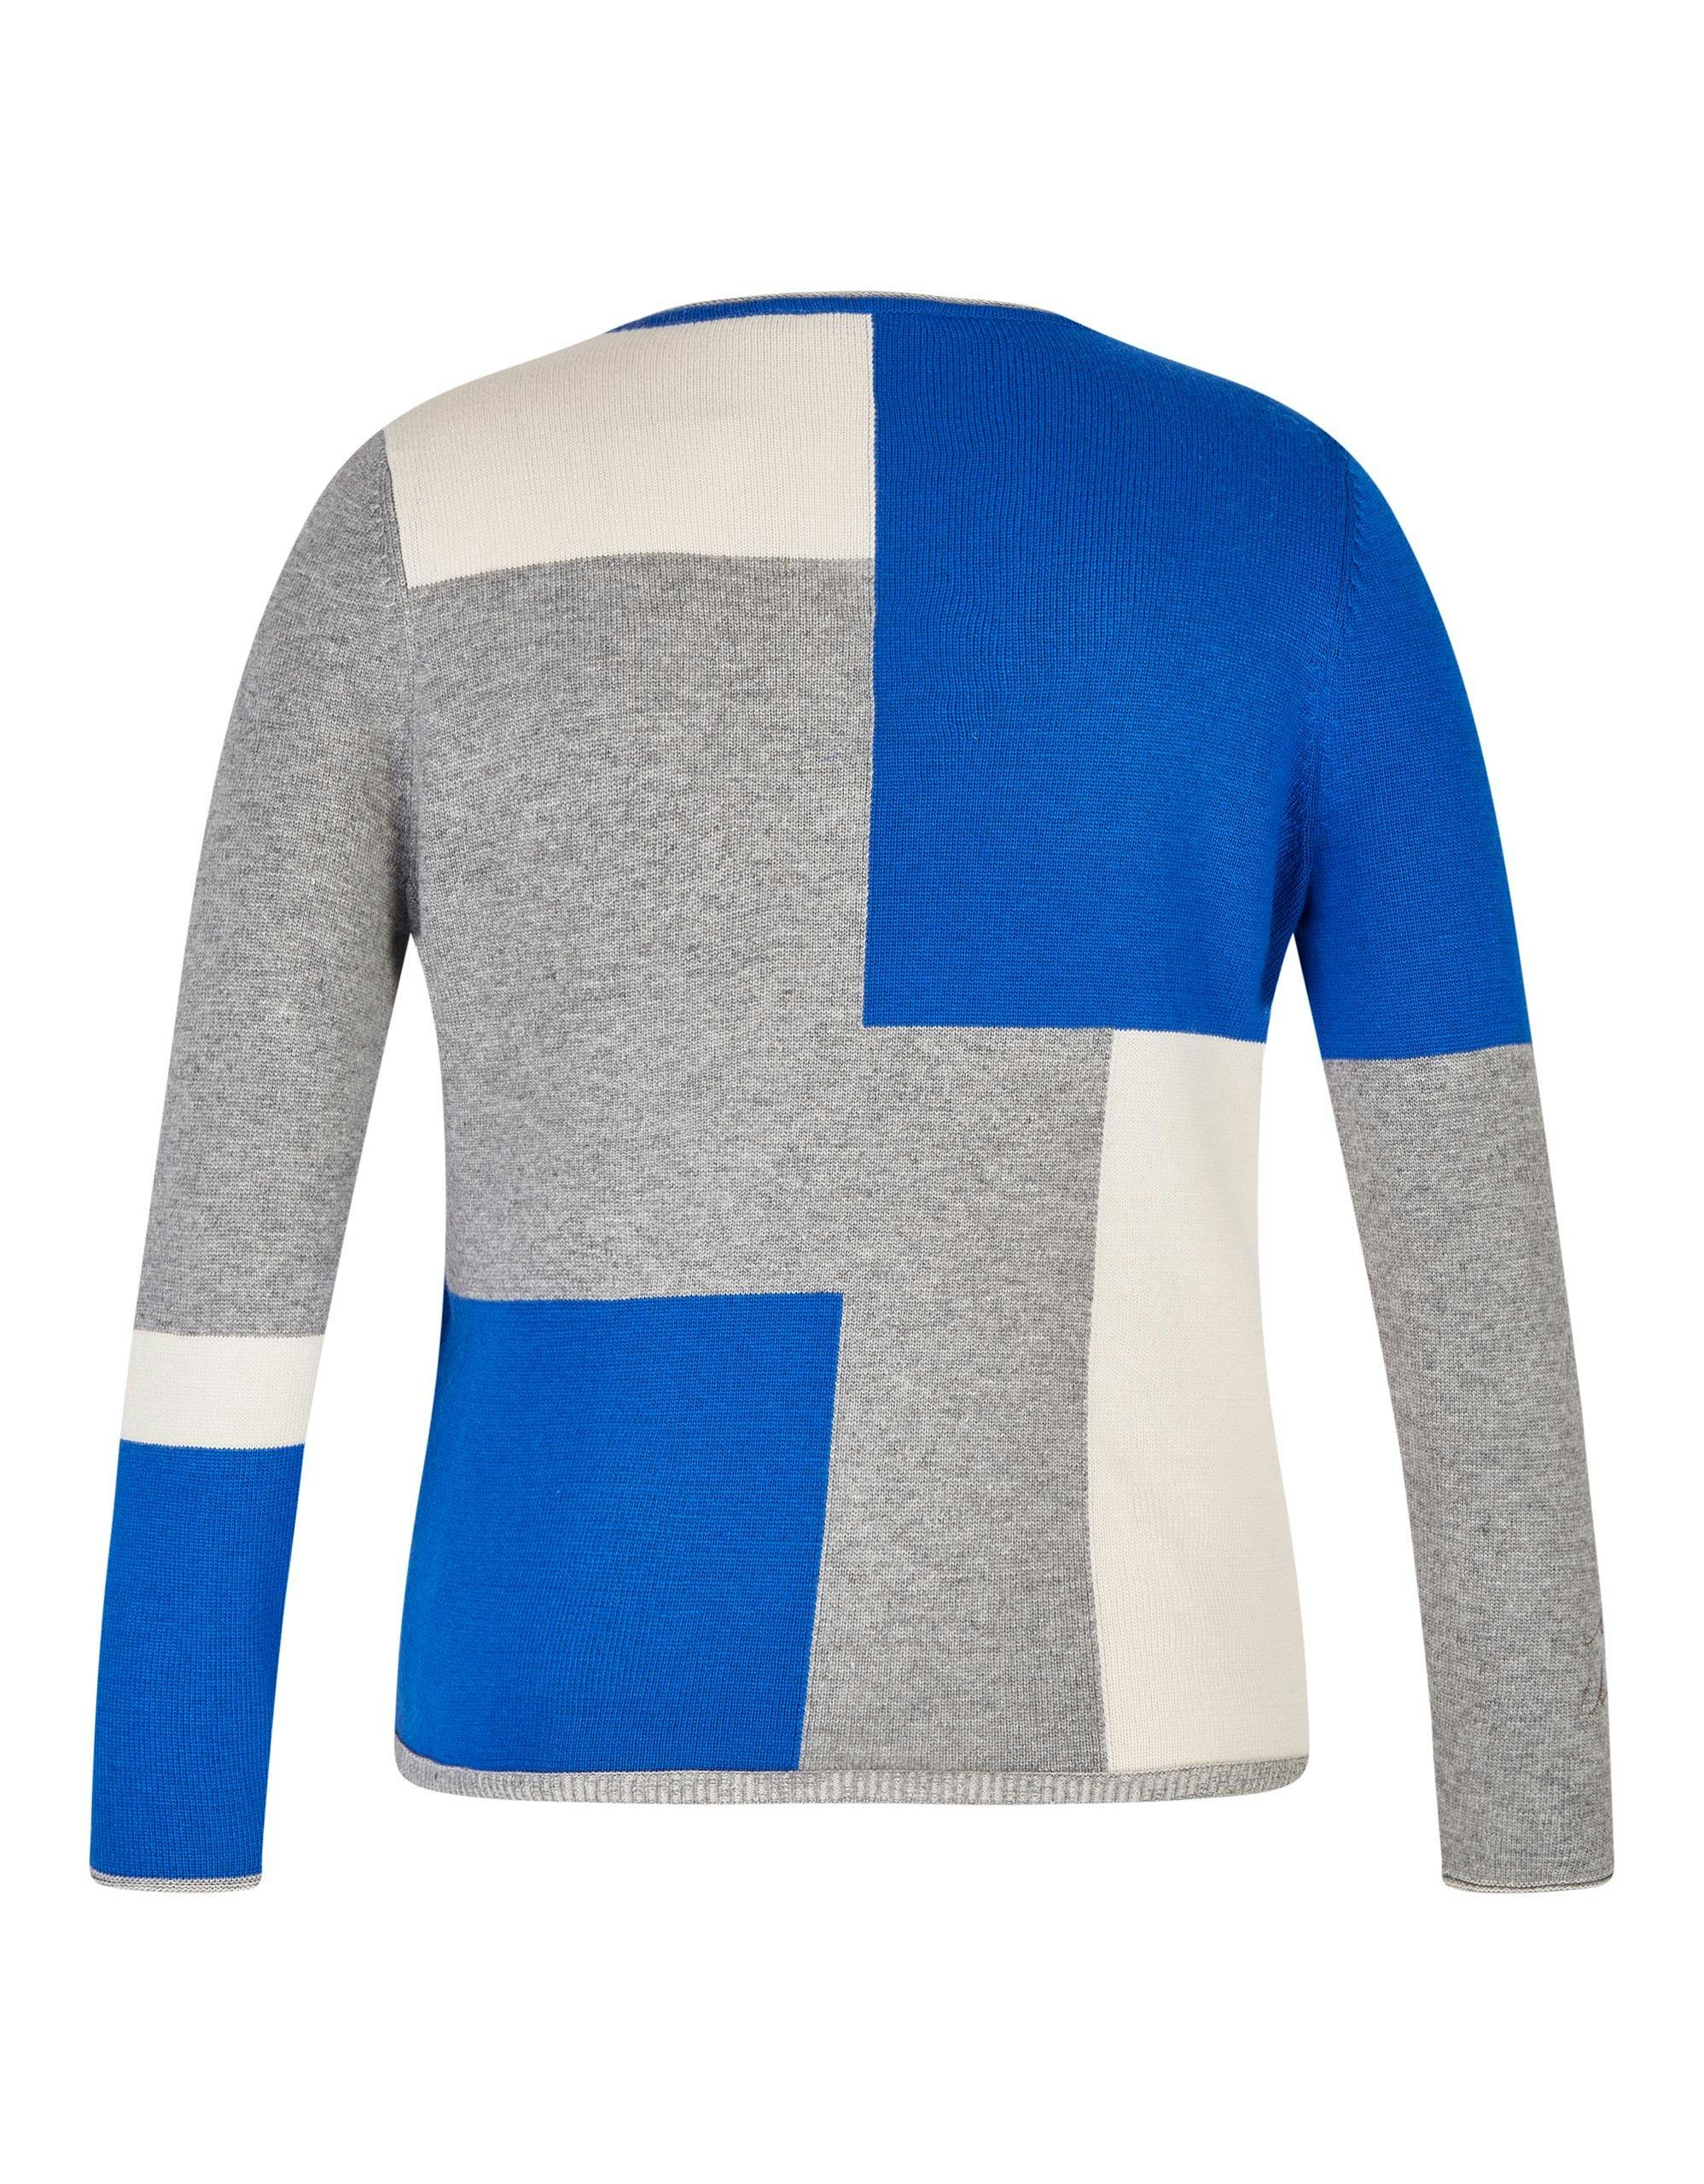 KINDER Pullovers & Sweatshirts NO STYLE Kitz-pichler Strickjacke Dunkelblau 140 Rabatt 96 % 